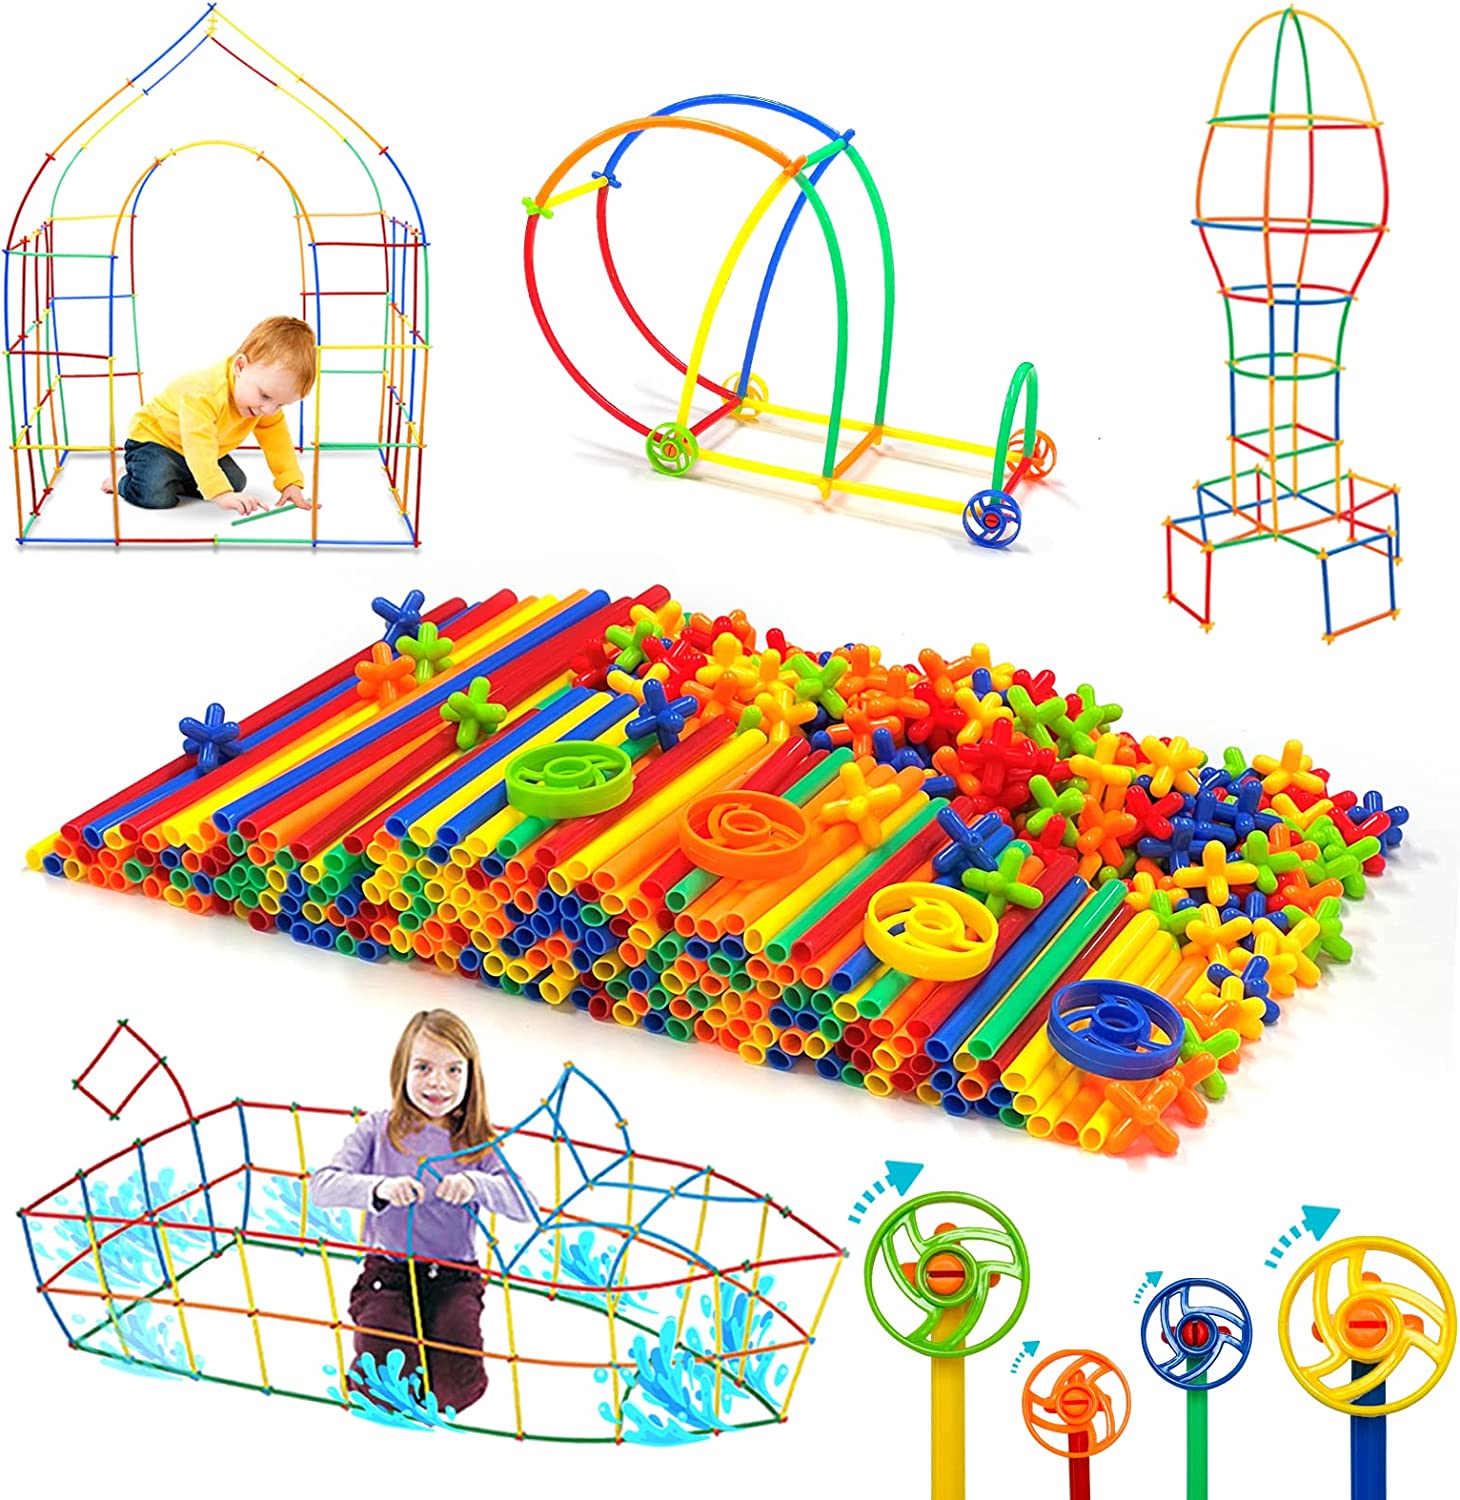 FALDAA 400 Pieces Building Block Kids STEM Toys Educational Building Toys  Discs Sets Interlocking Solid Plastic for Preschool Kids Boys and Girls  Aged